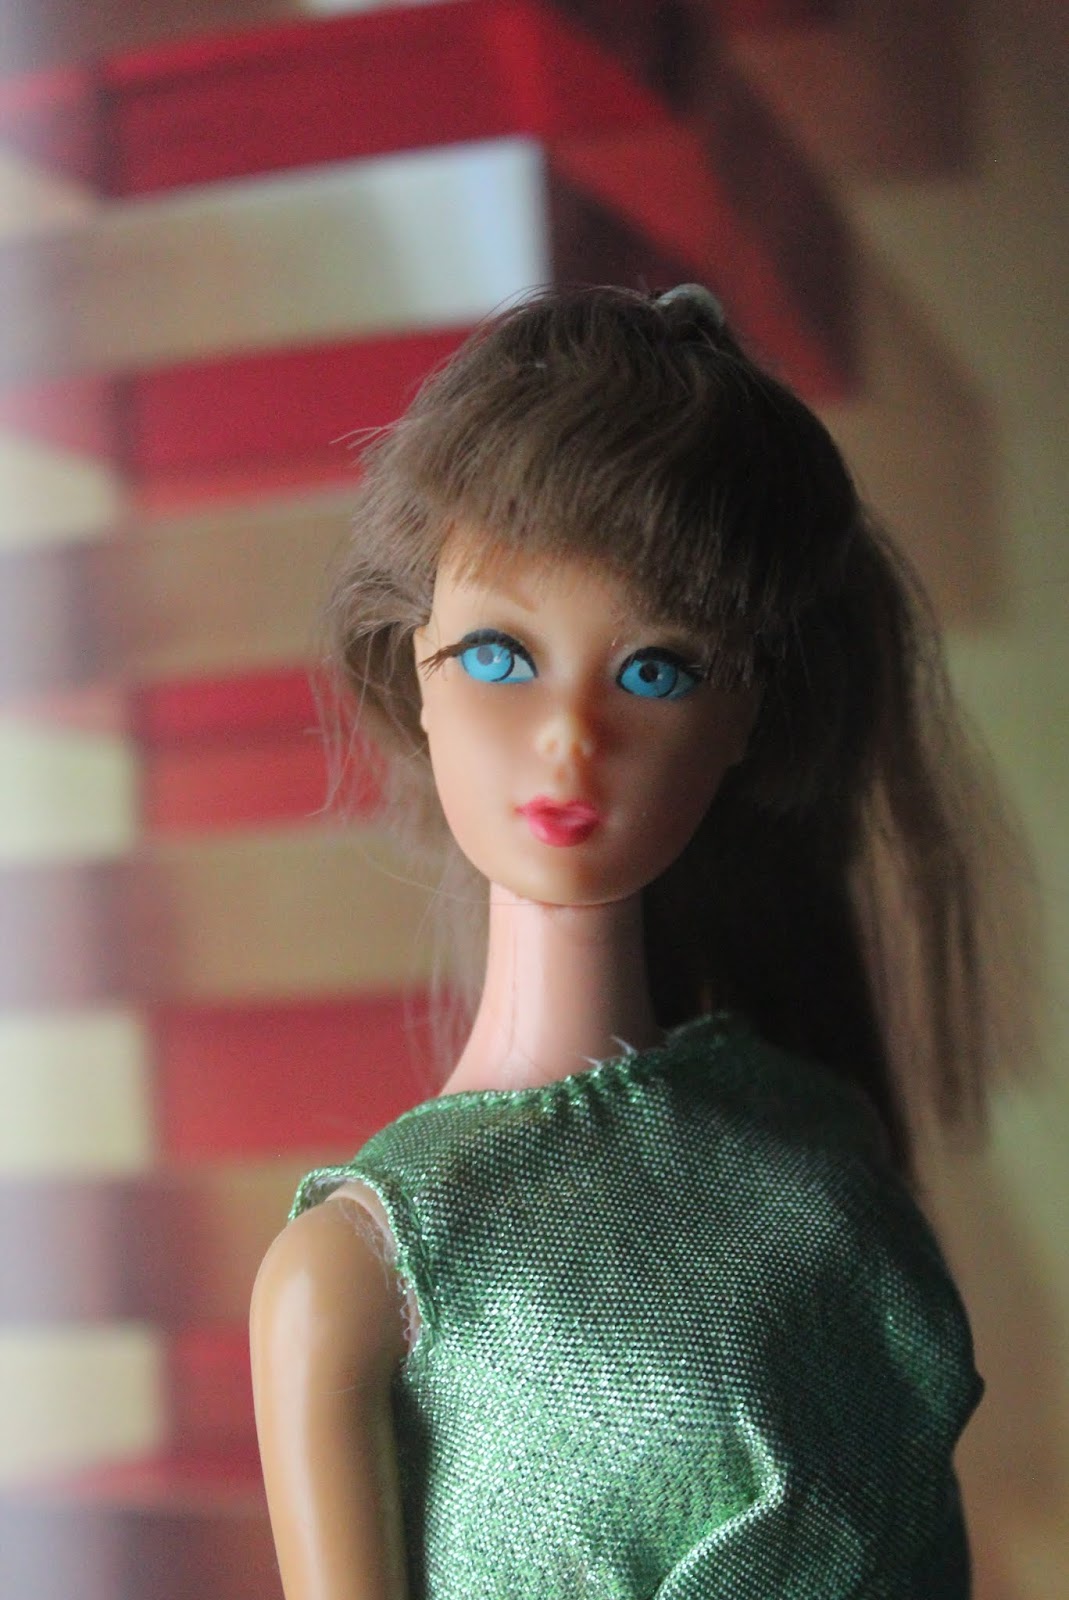 Vintage mod era sun kissed hair twist and turn Barbie doll by